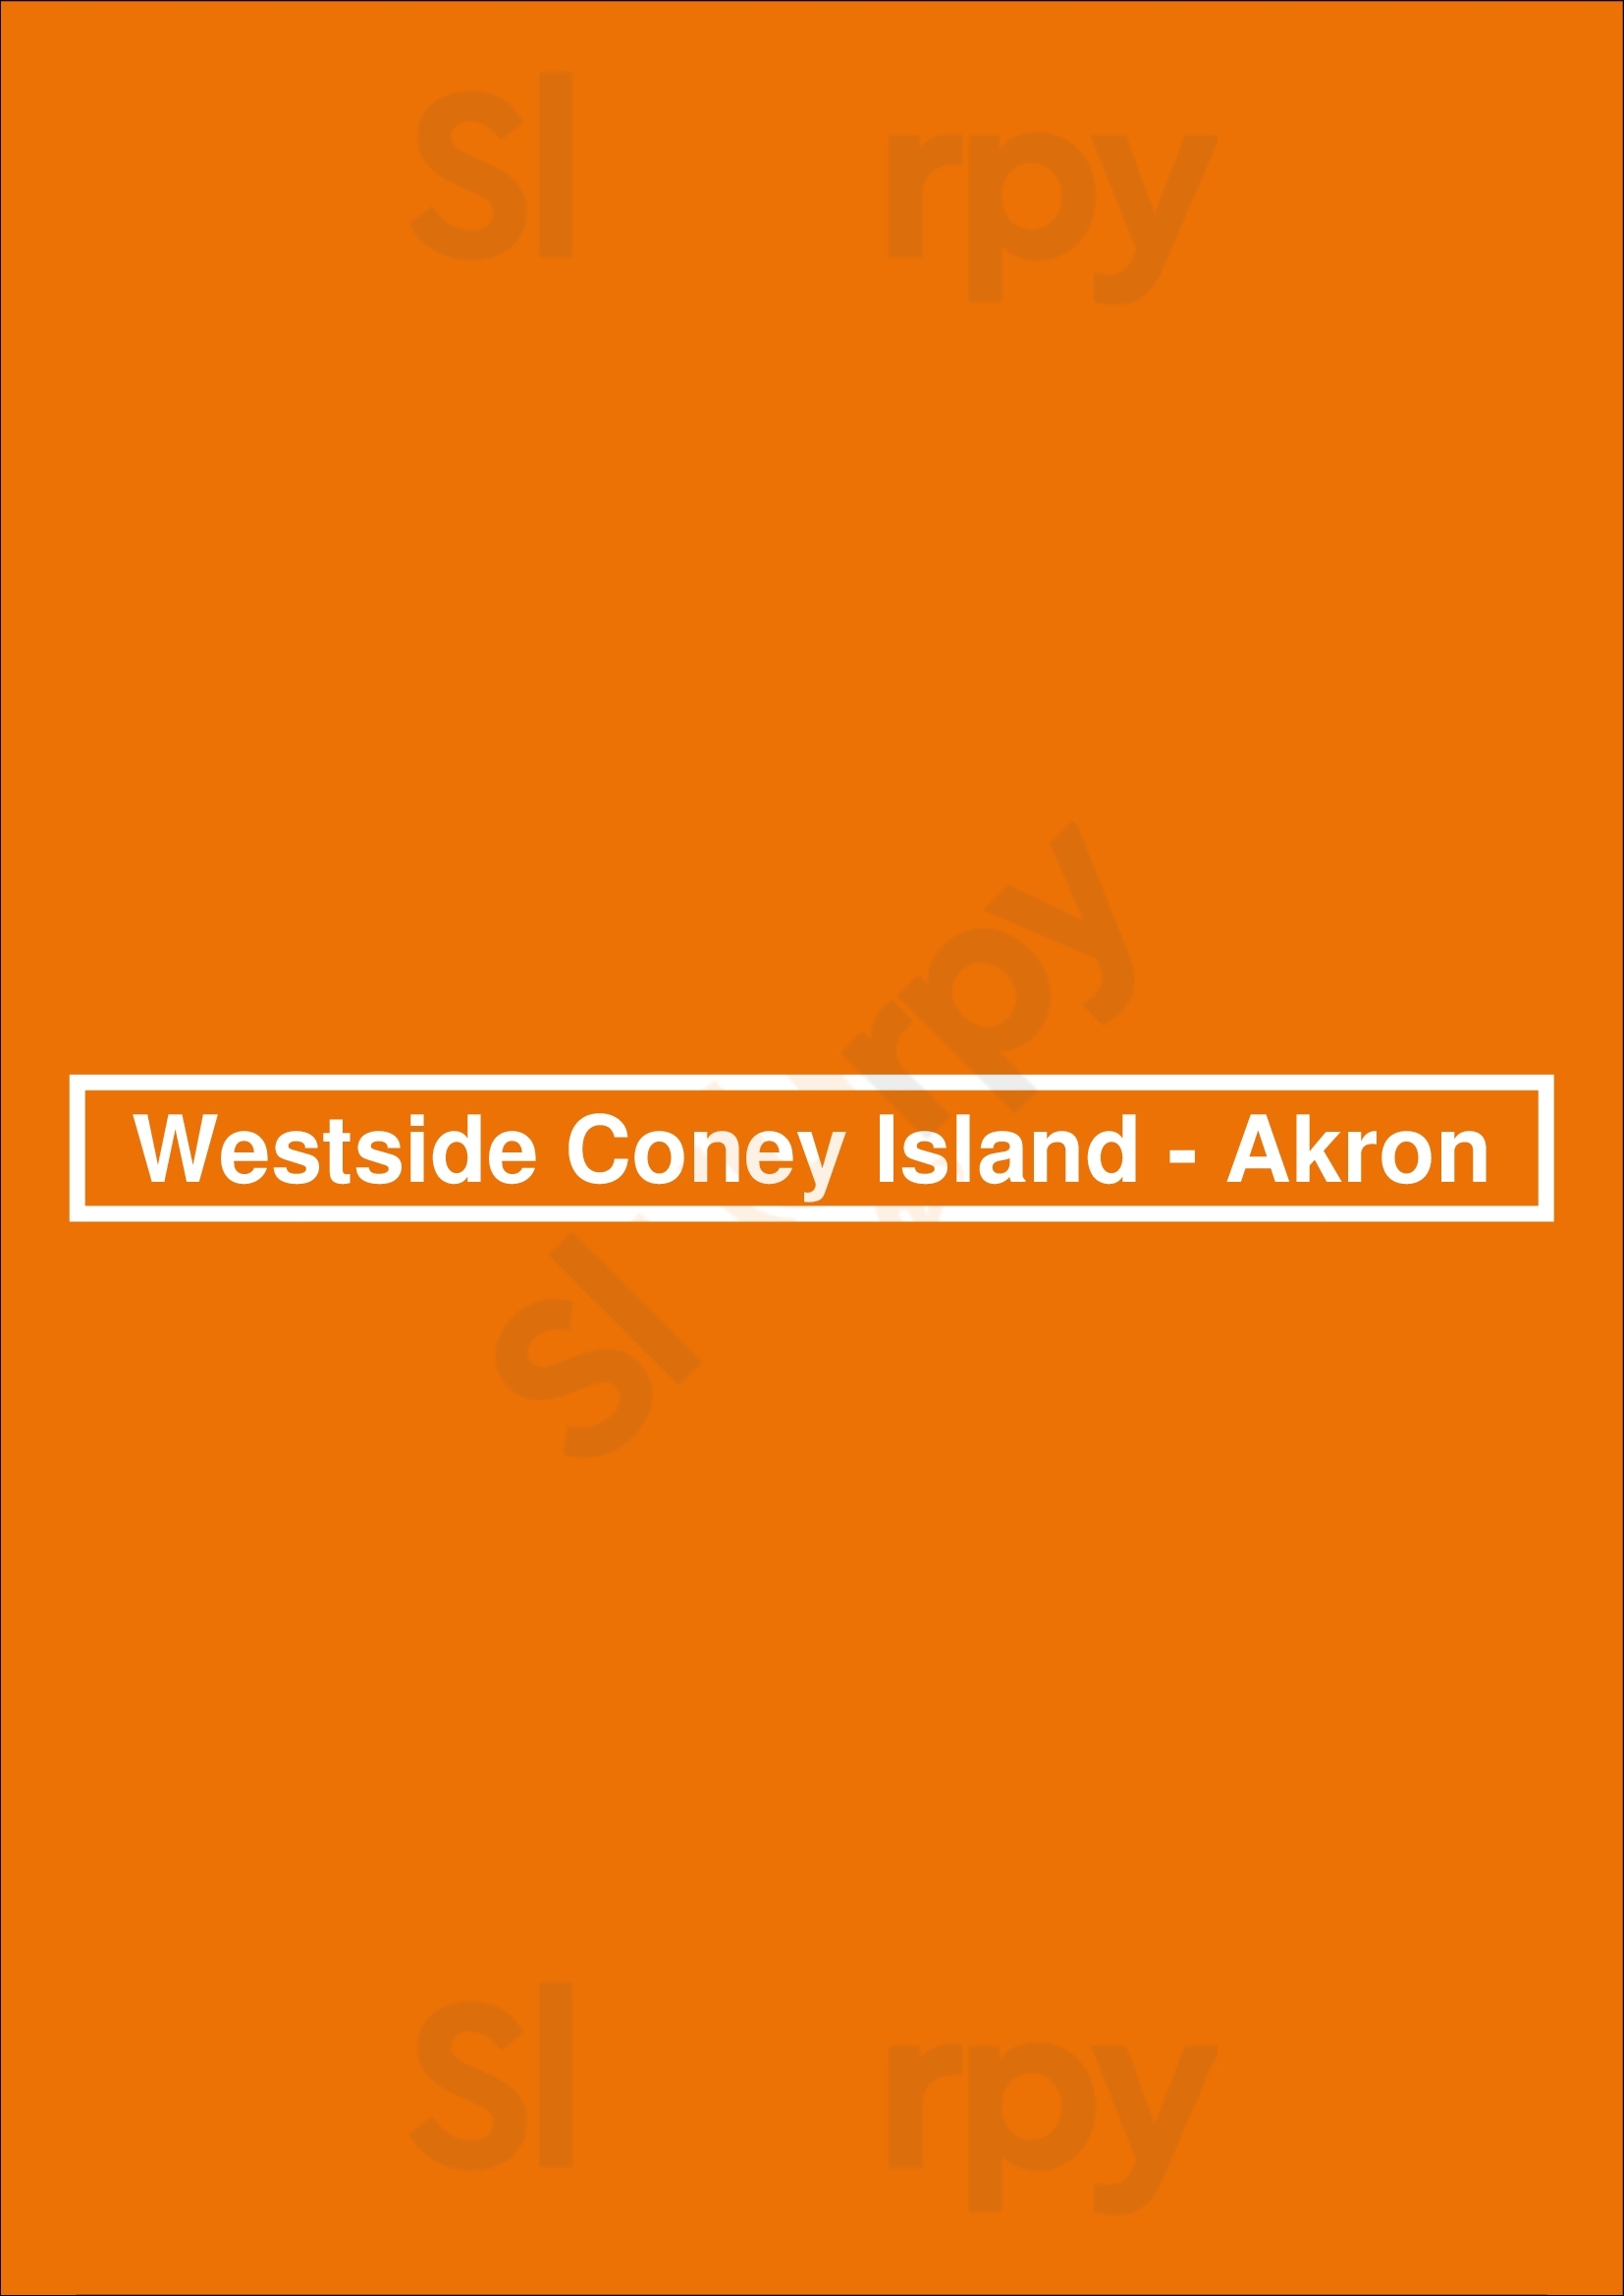 Westside Coney Island - Akron Akron Menu - 1